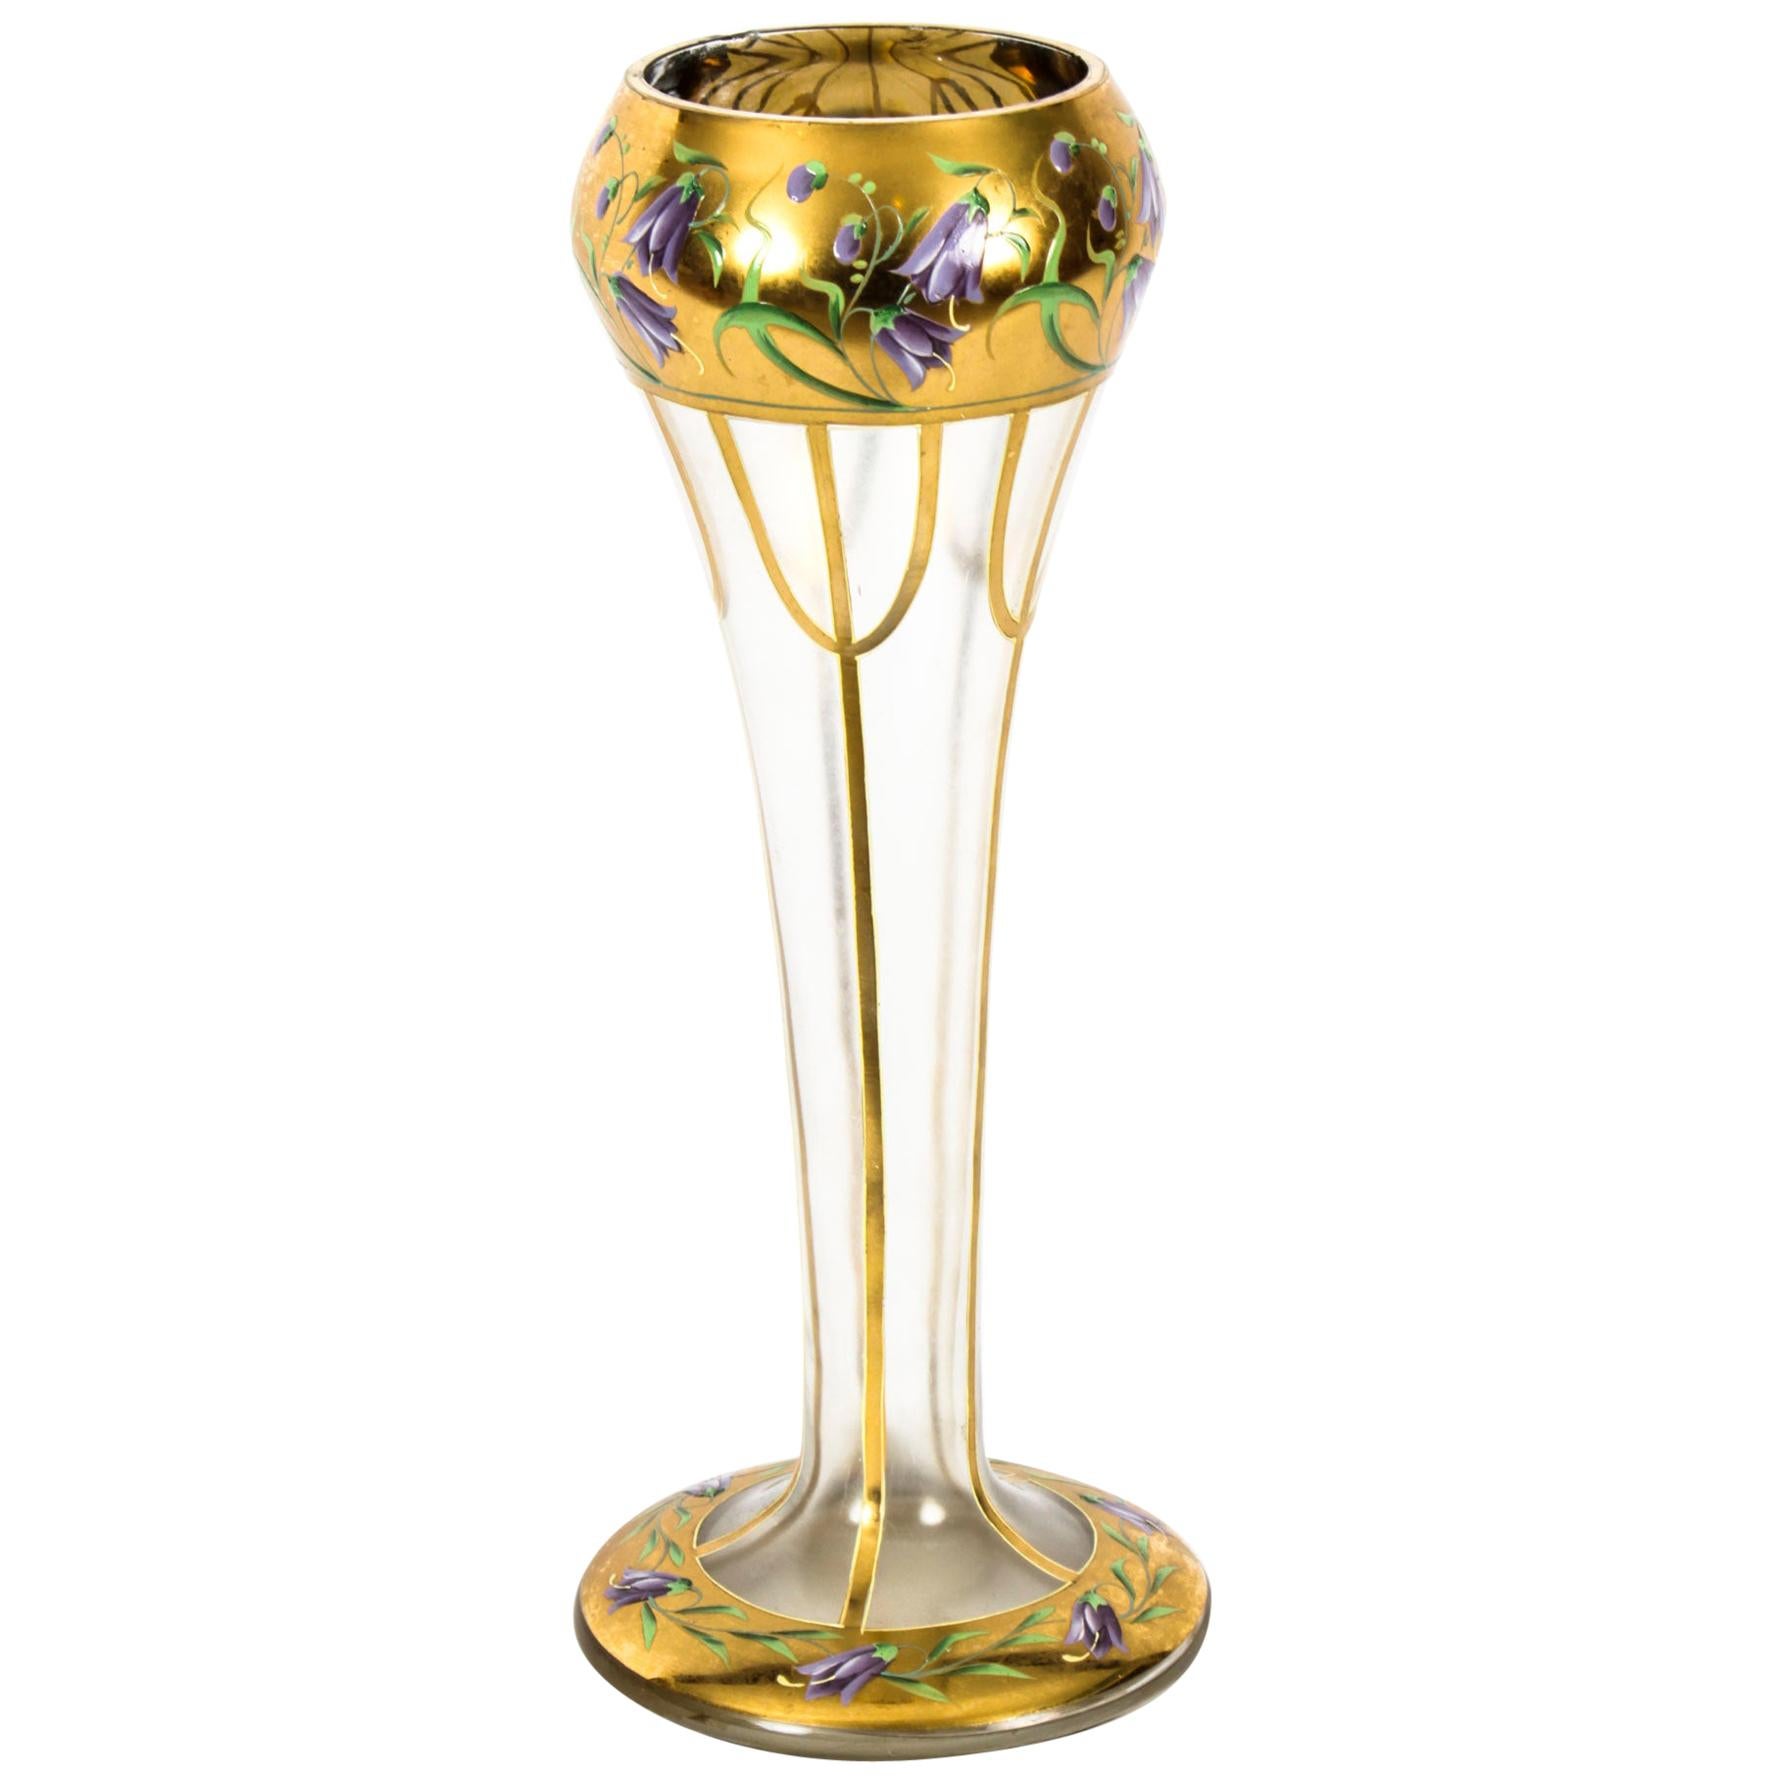 Antique French Art Nouveau Enameled Glass Vase, 19th Century